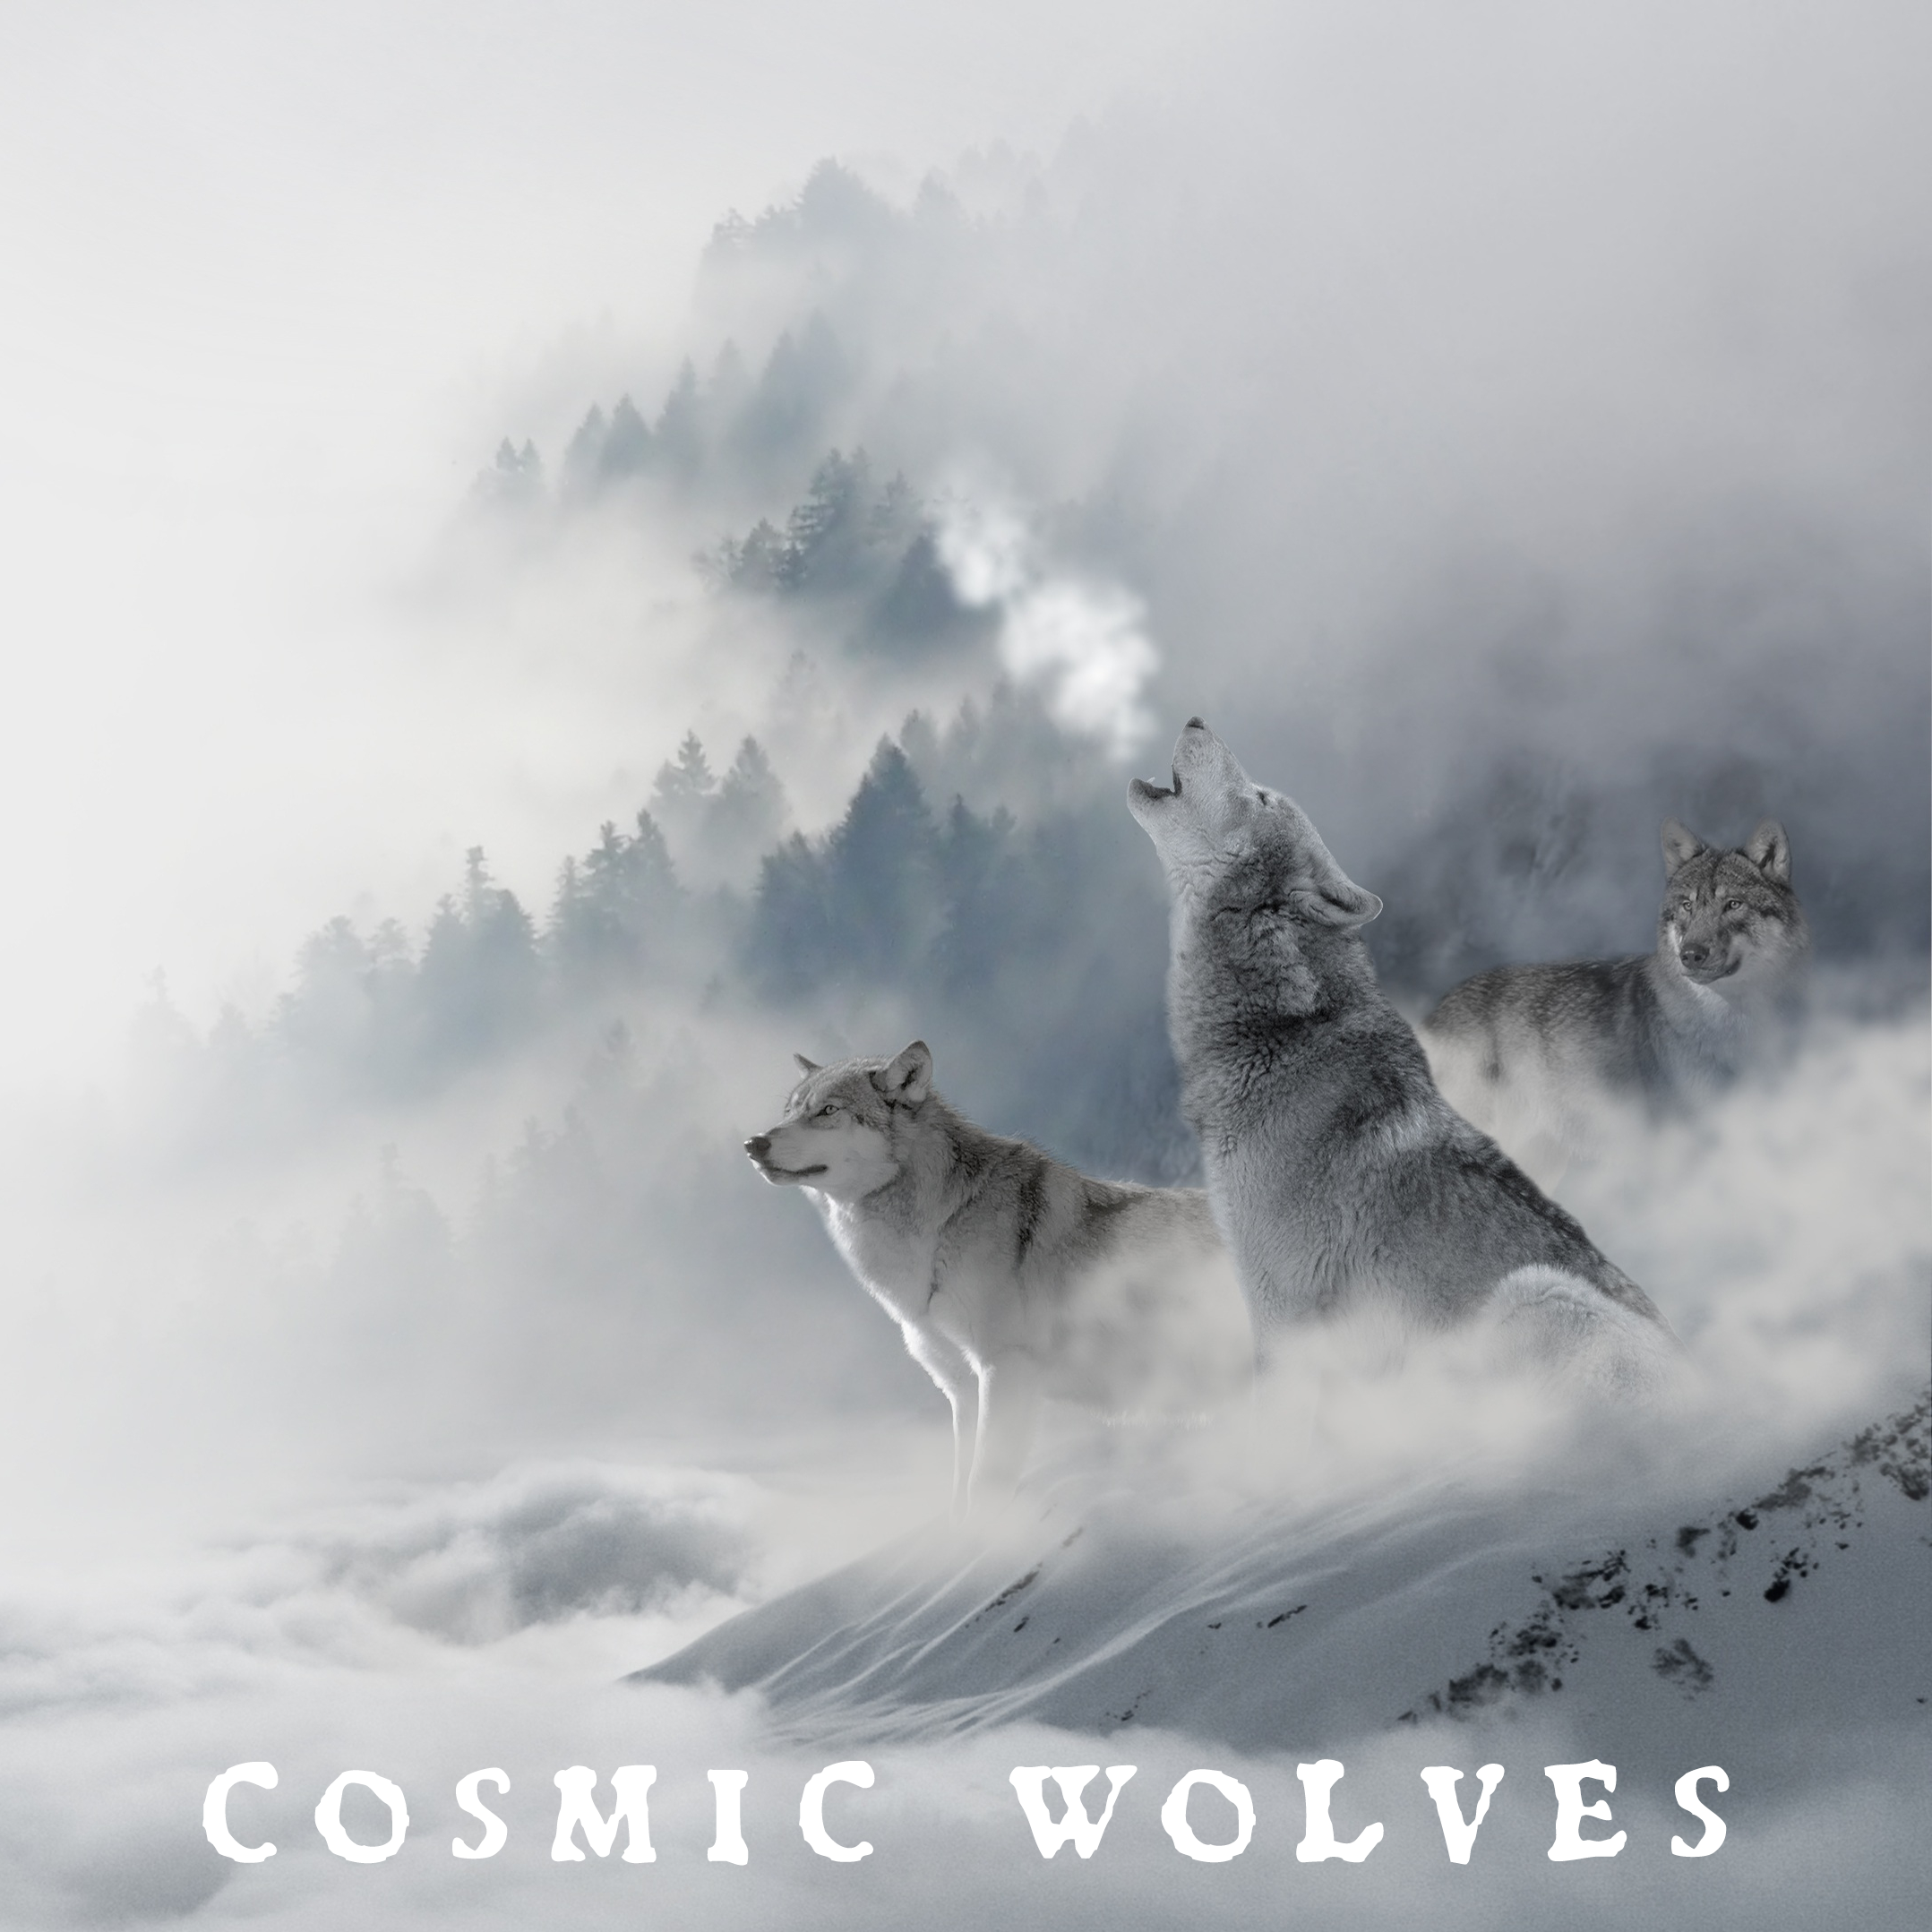 wolves howling against a snowy, mountainous landscape